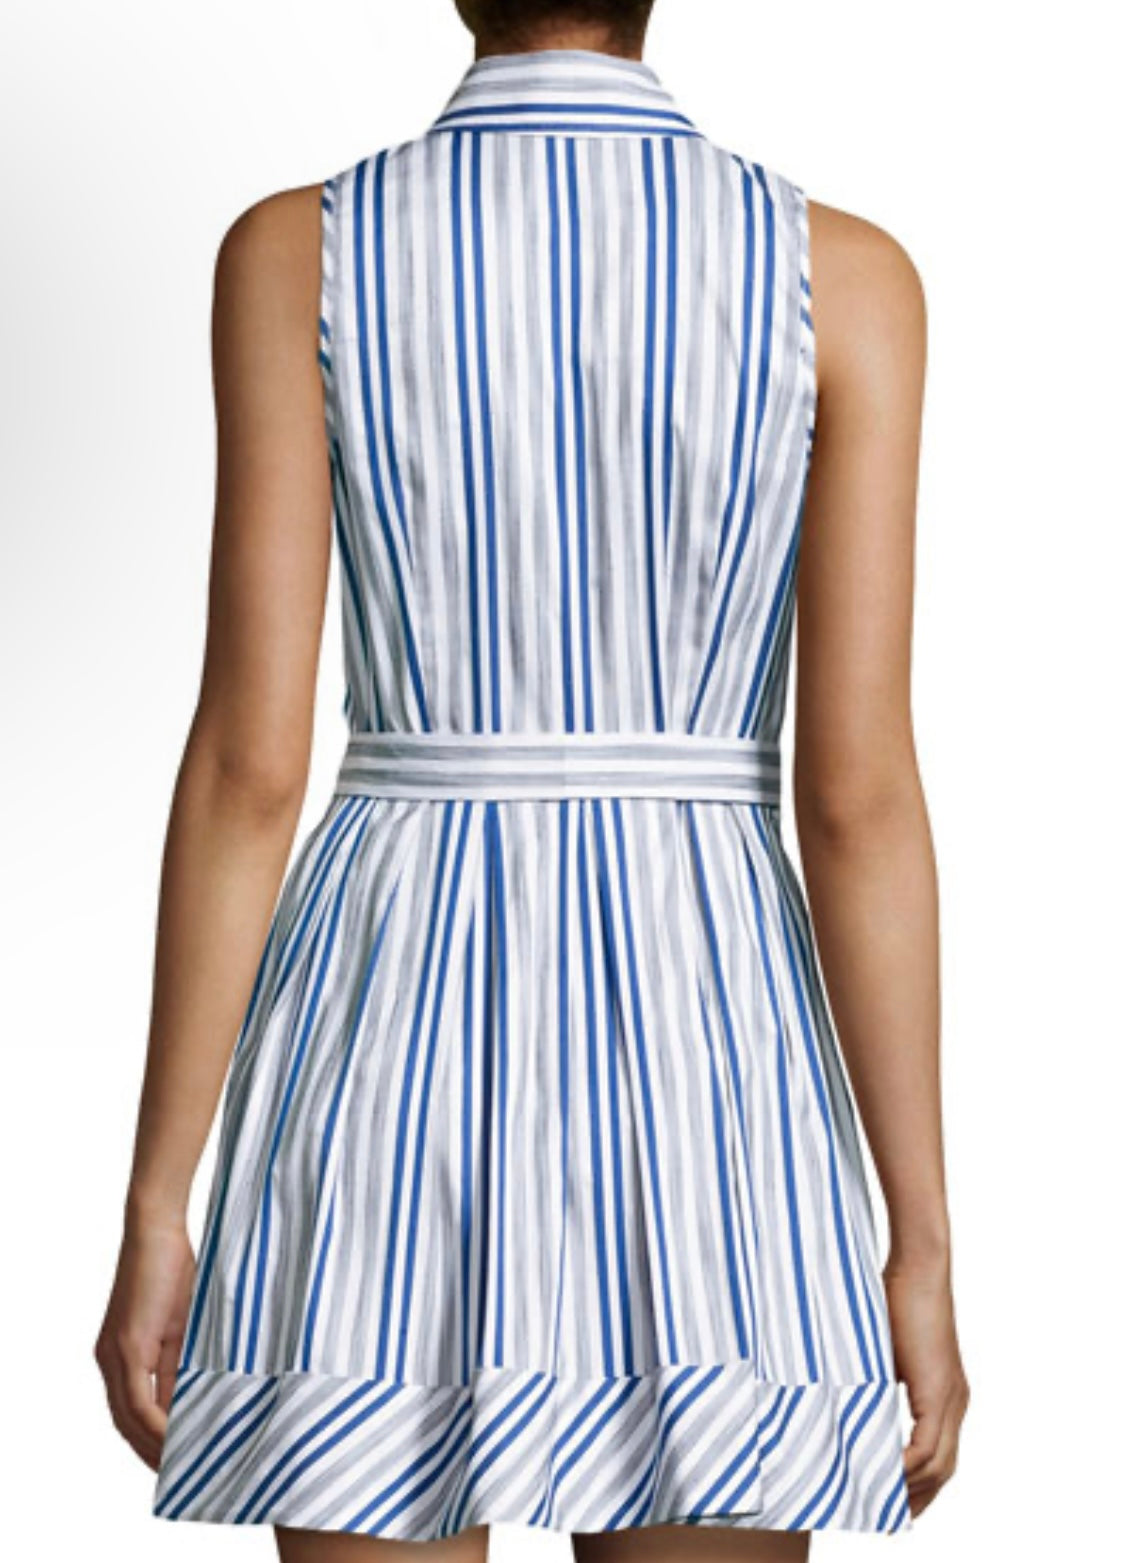 Milly
Stripe Sleeveless Shirtdress, Blue/White